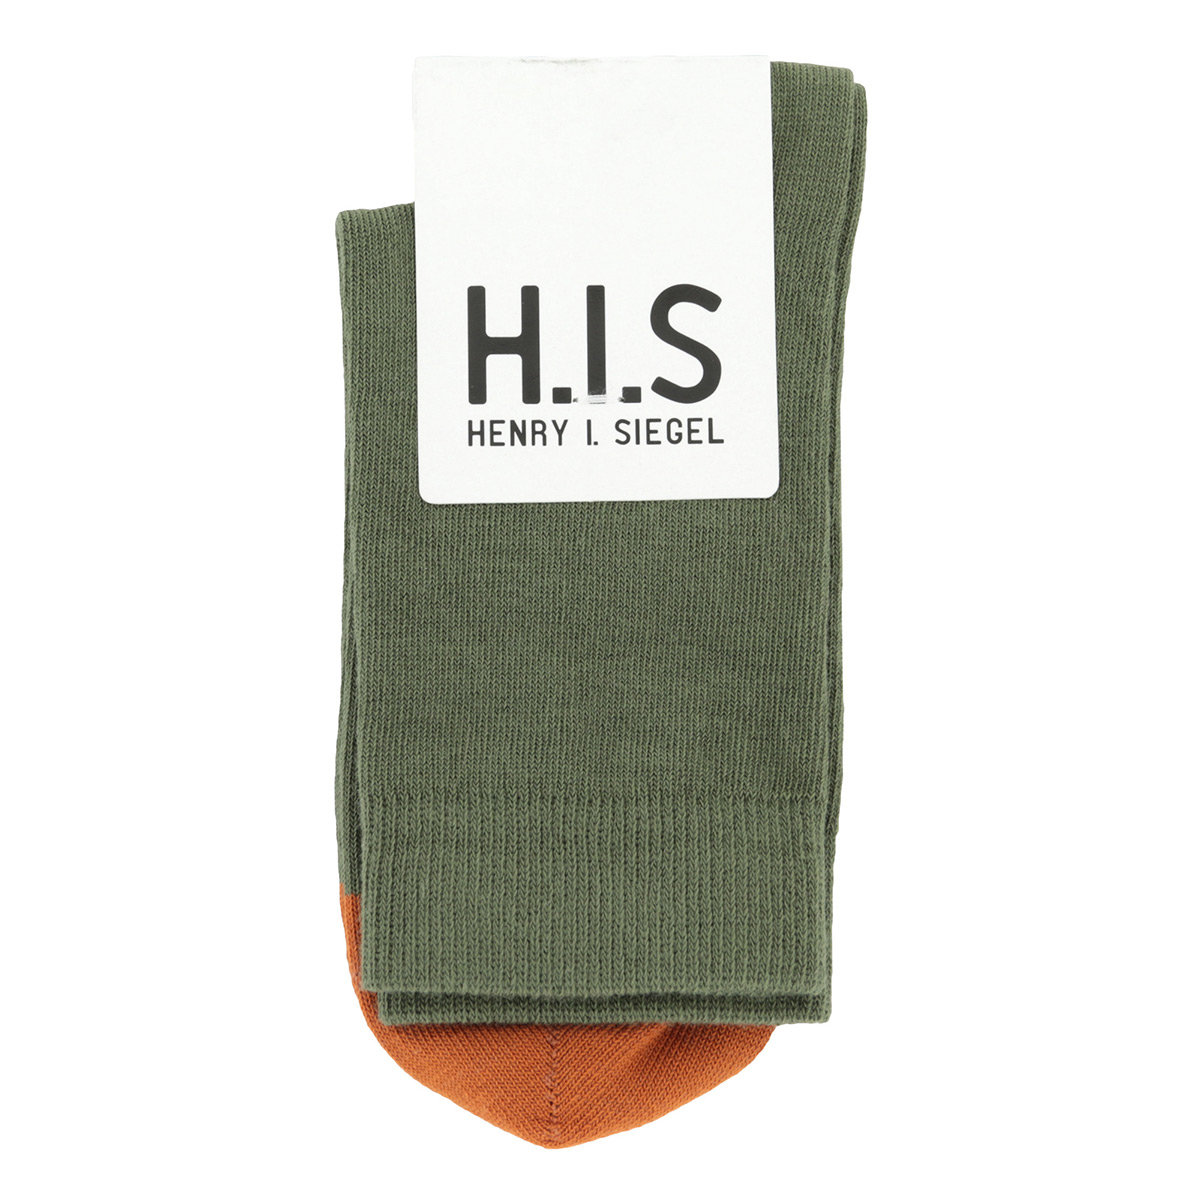 H.I.S Socks Kids